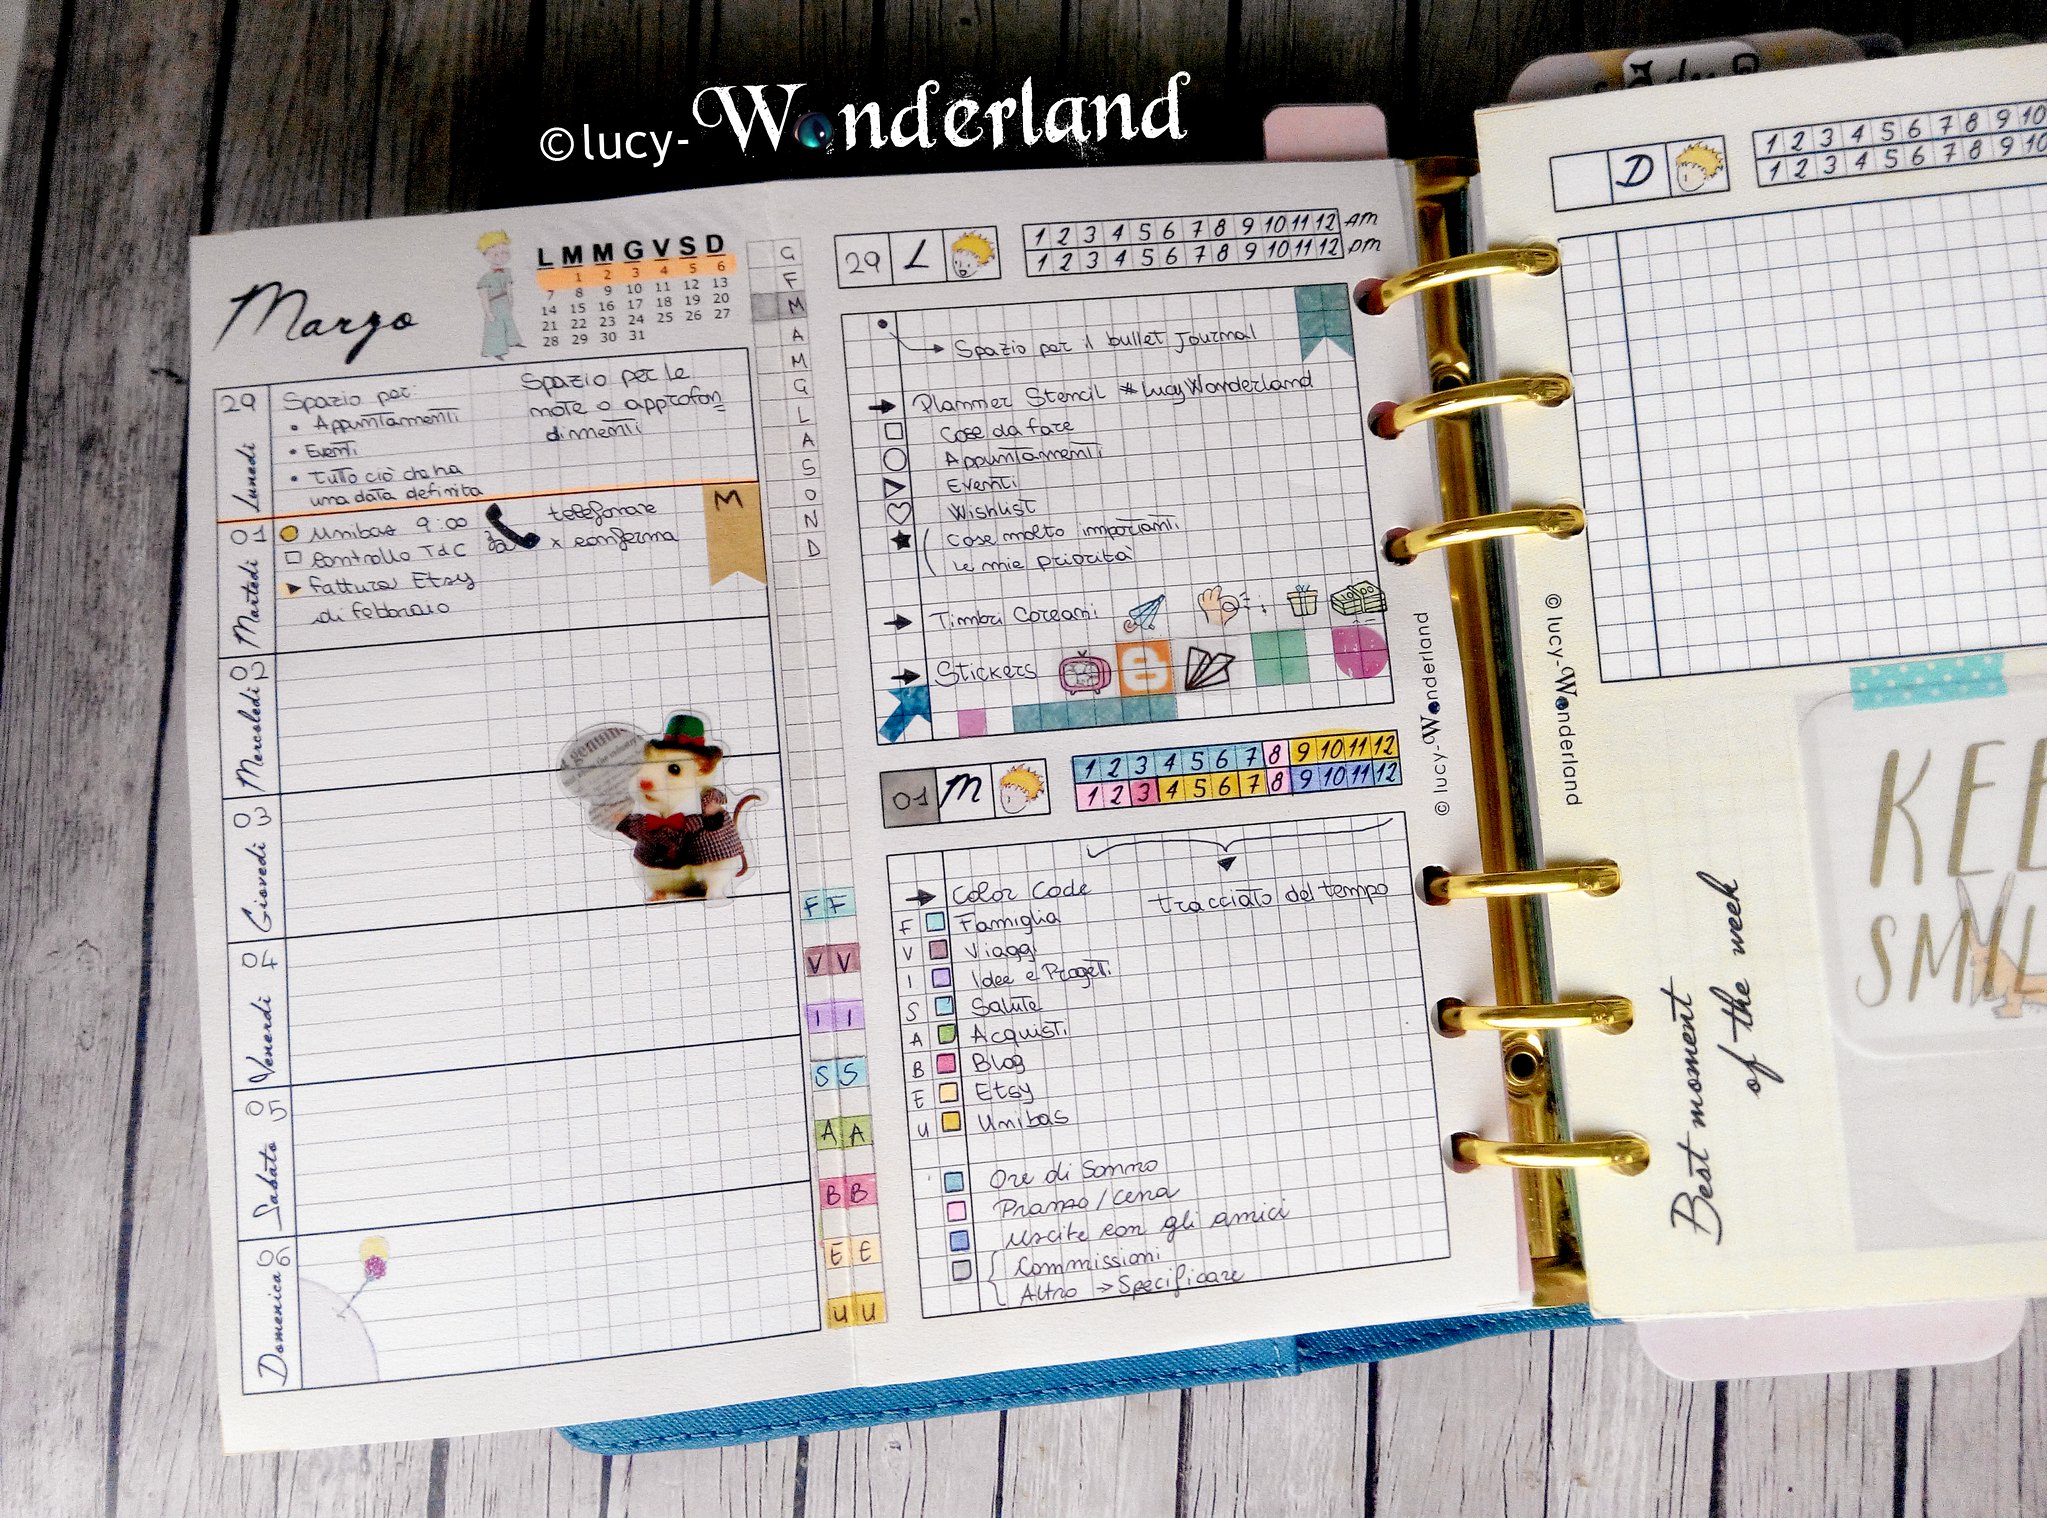 Lucy-Wonderland: come organizzare un bullet journal nella